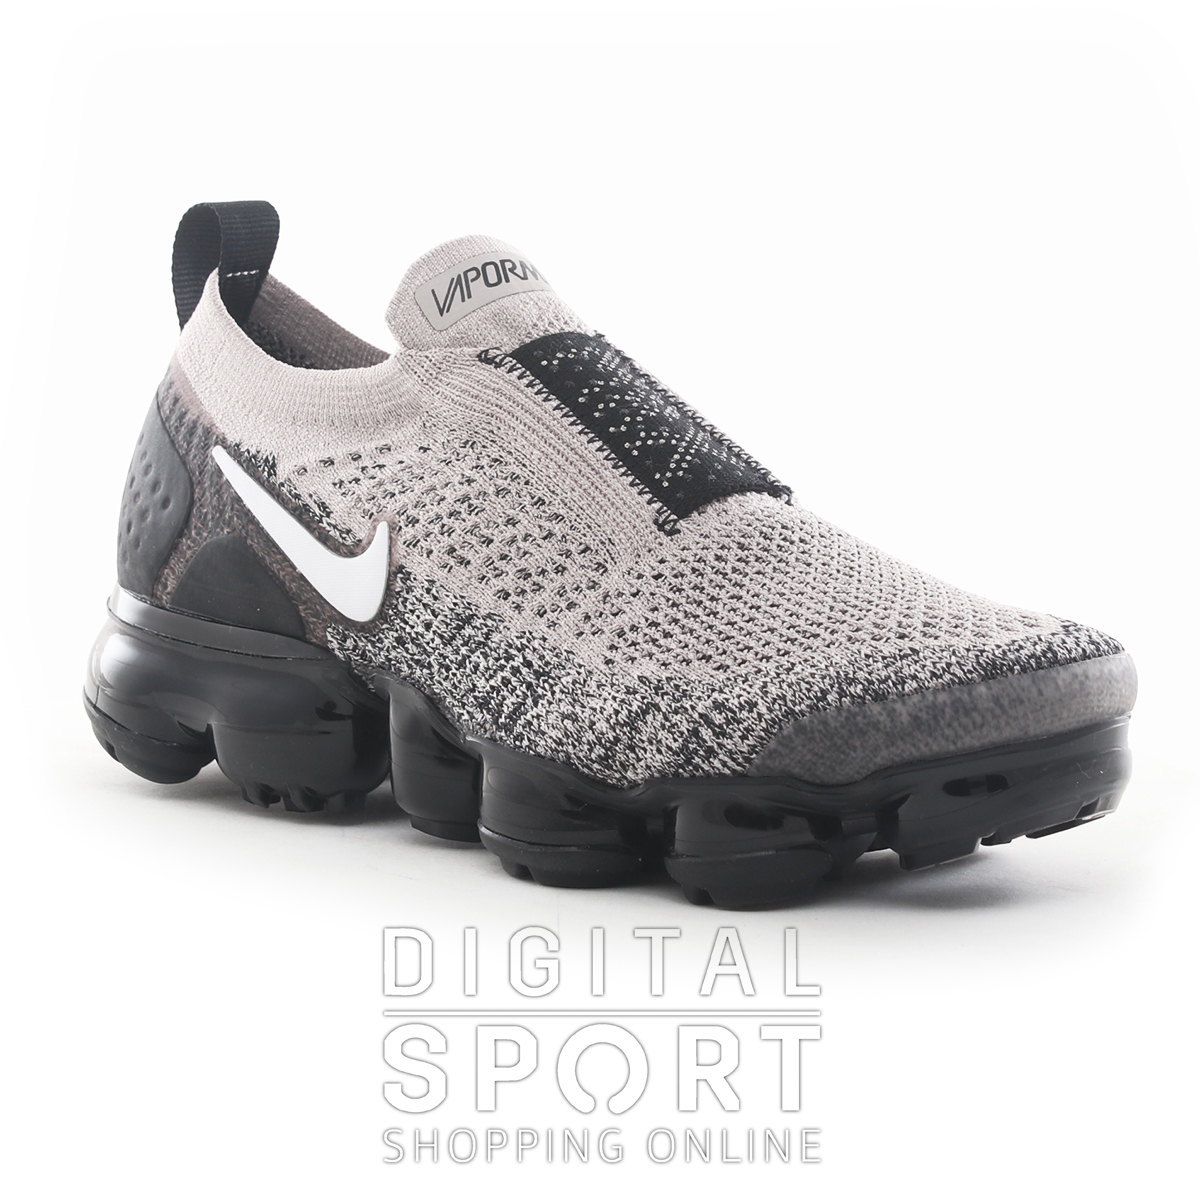 nike vapormax sin cordones Nike online – Compra productos Nike baratos